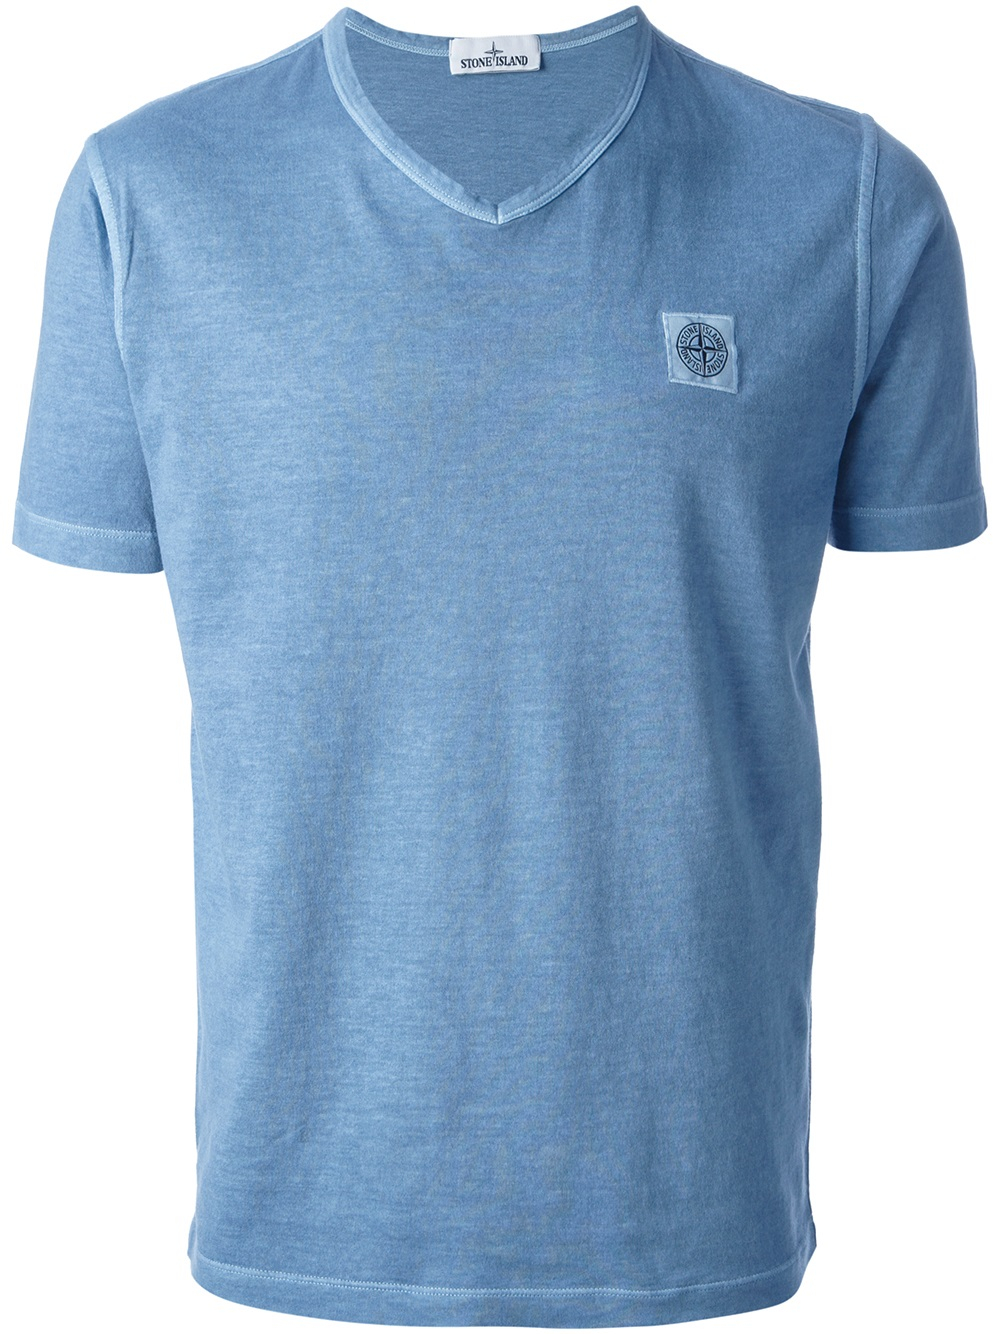 Lyst - Stone island V-neck T-shirt in Blue for Men